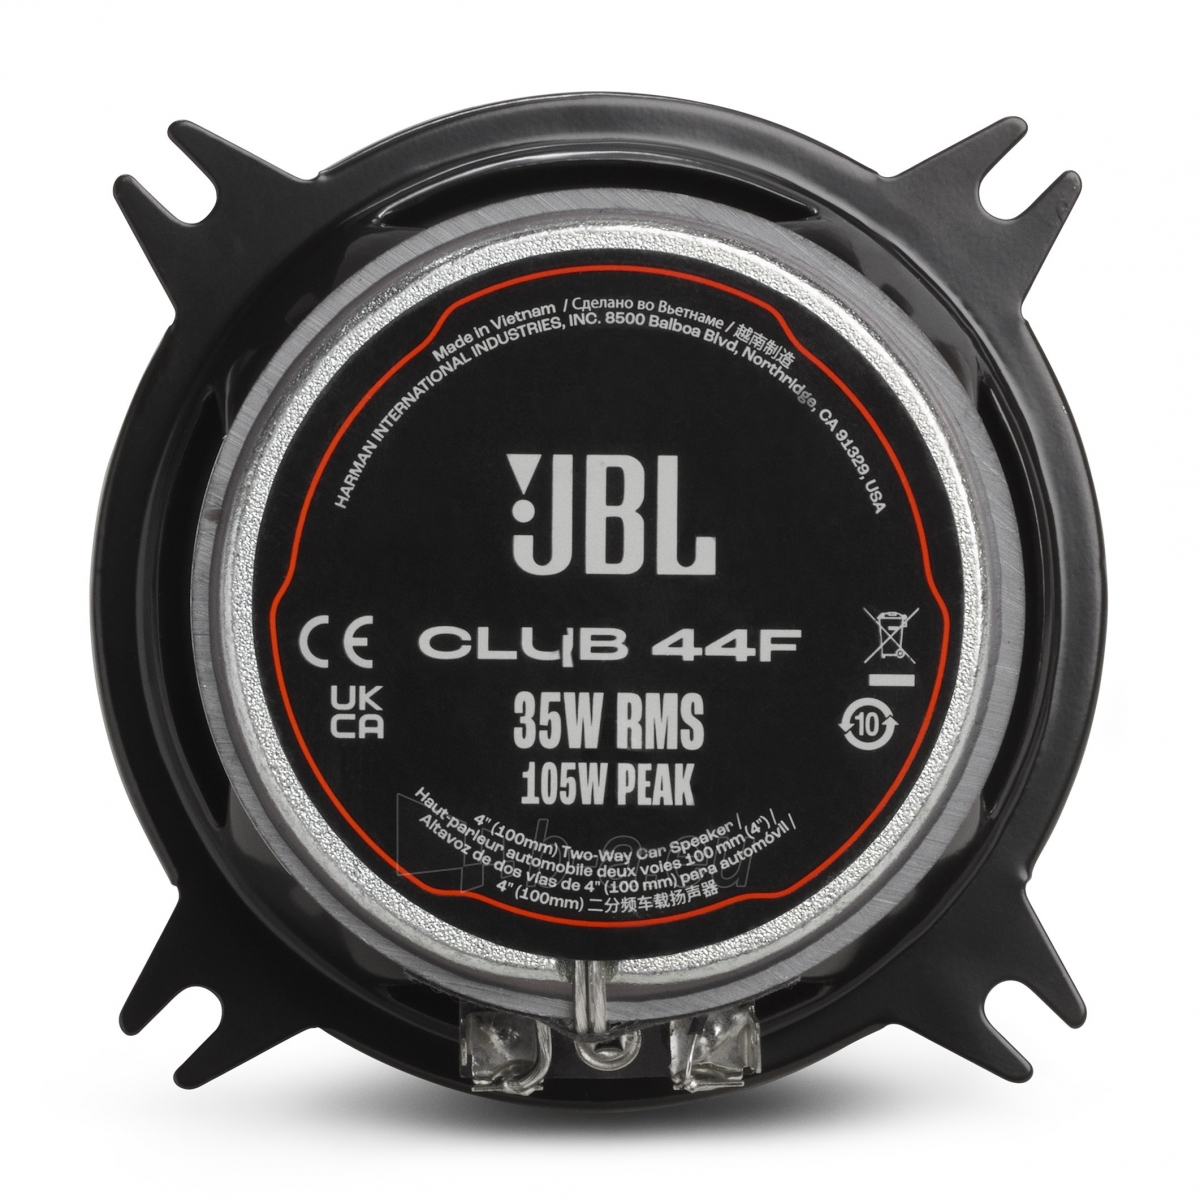 Autogarsiakalbiai JBL Club 44F 10cm 2-Way Coaxial Car Speaker paveikslėlis 8 iš 10